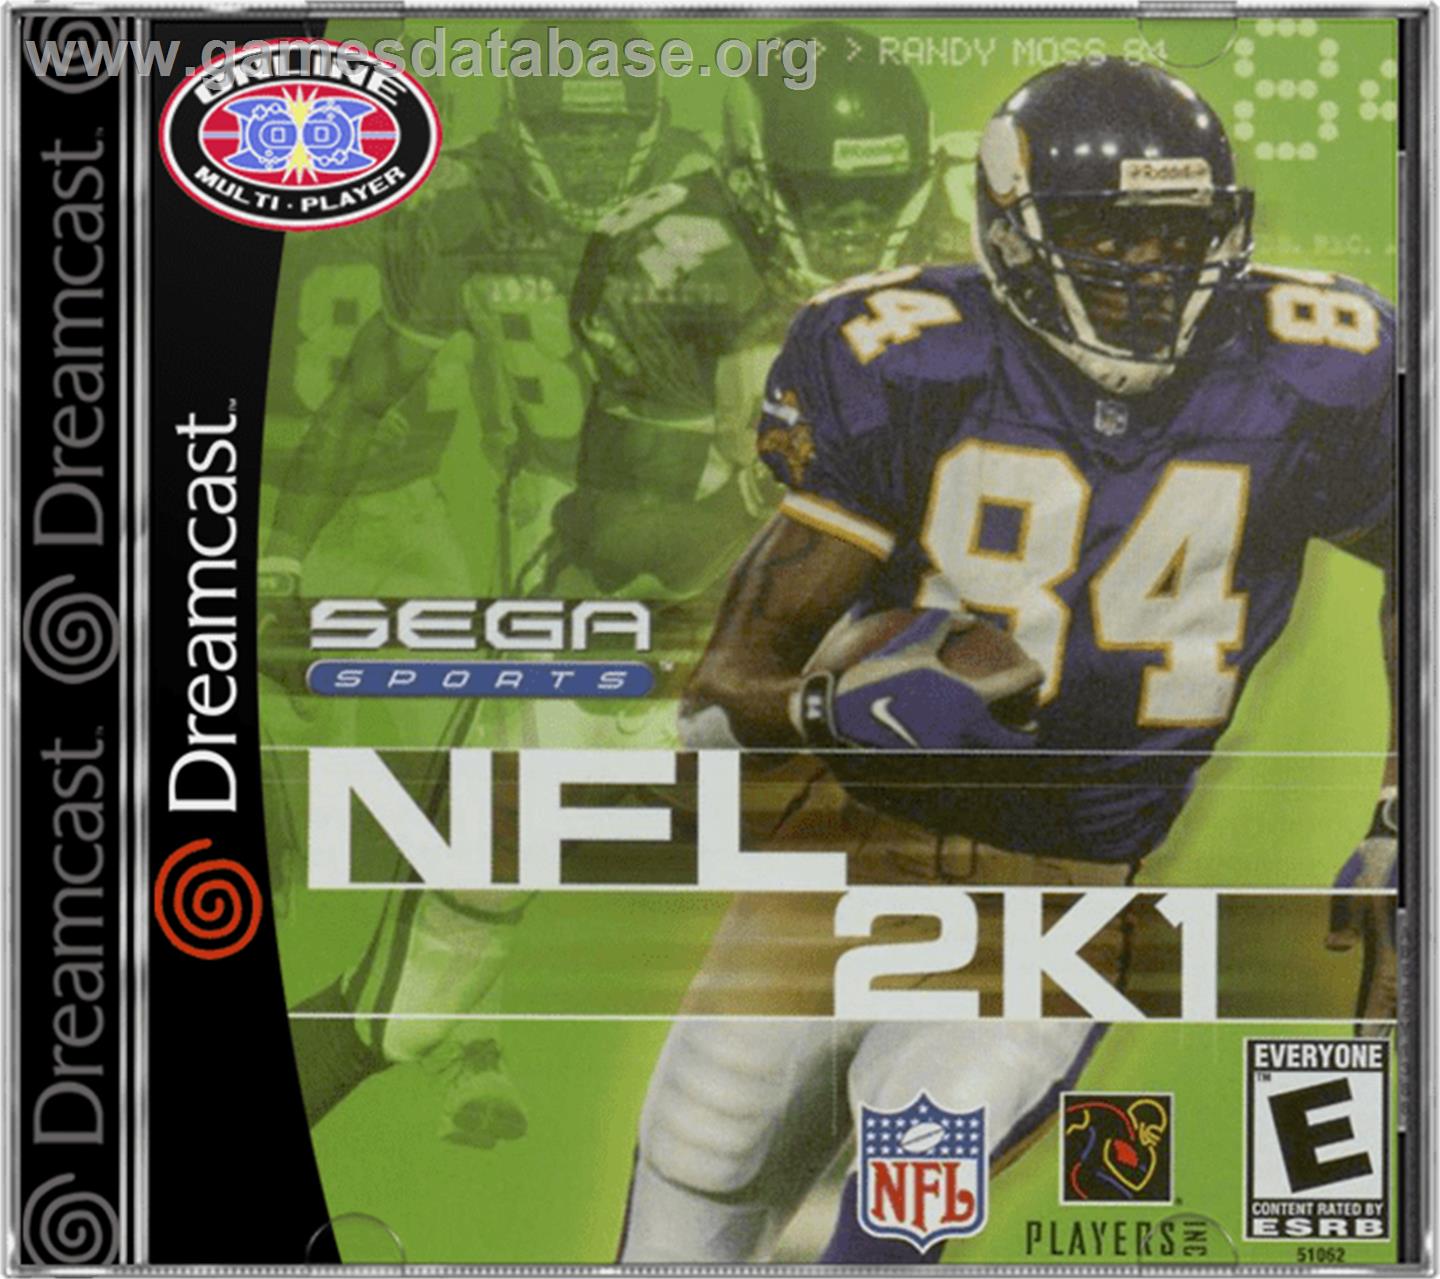 NFL 2K1 - Sega Dreamcast - Artwork - Box